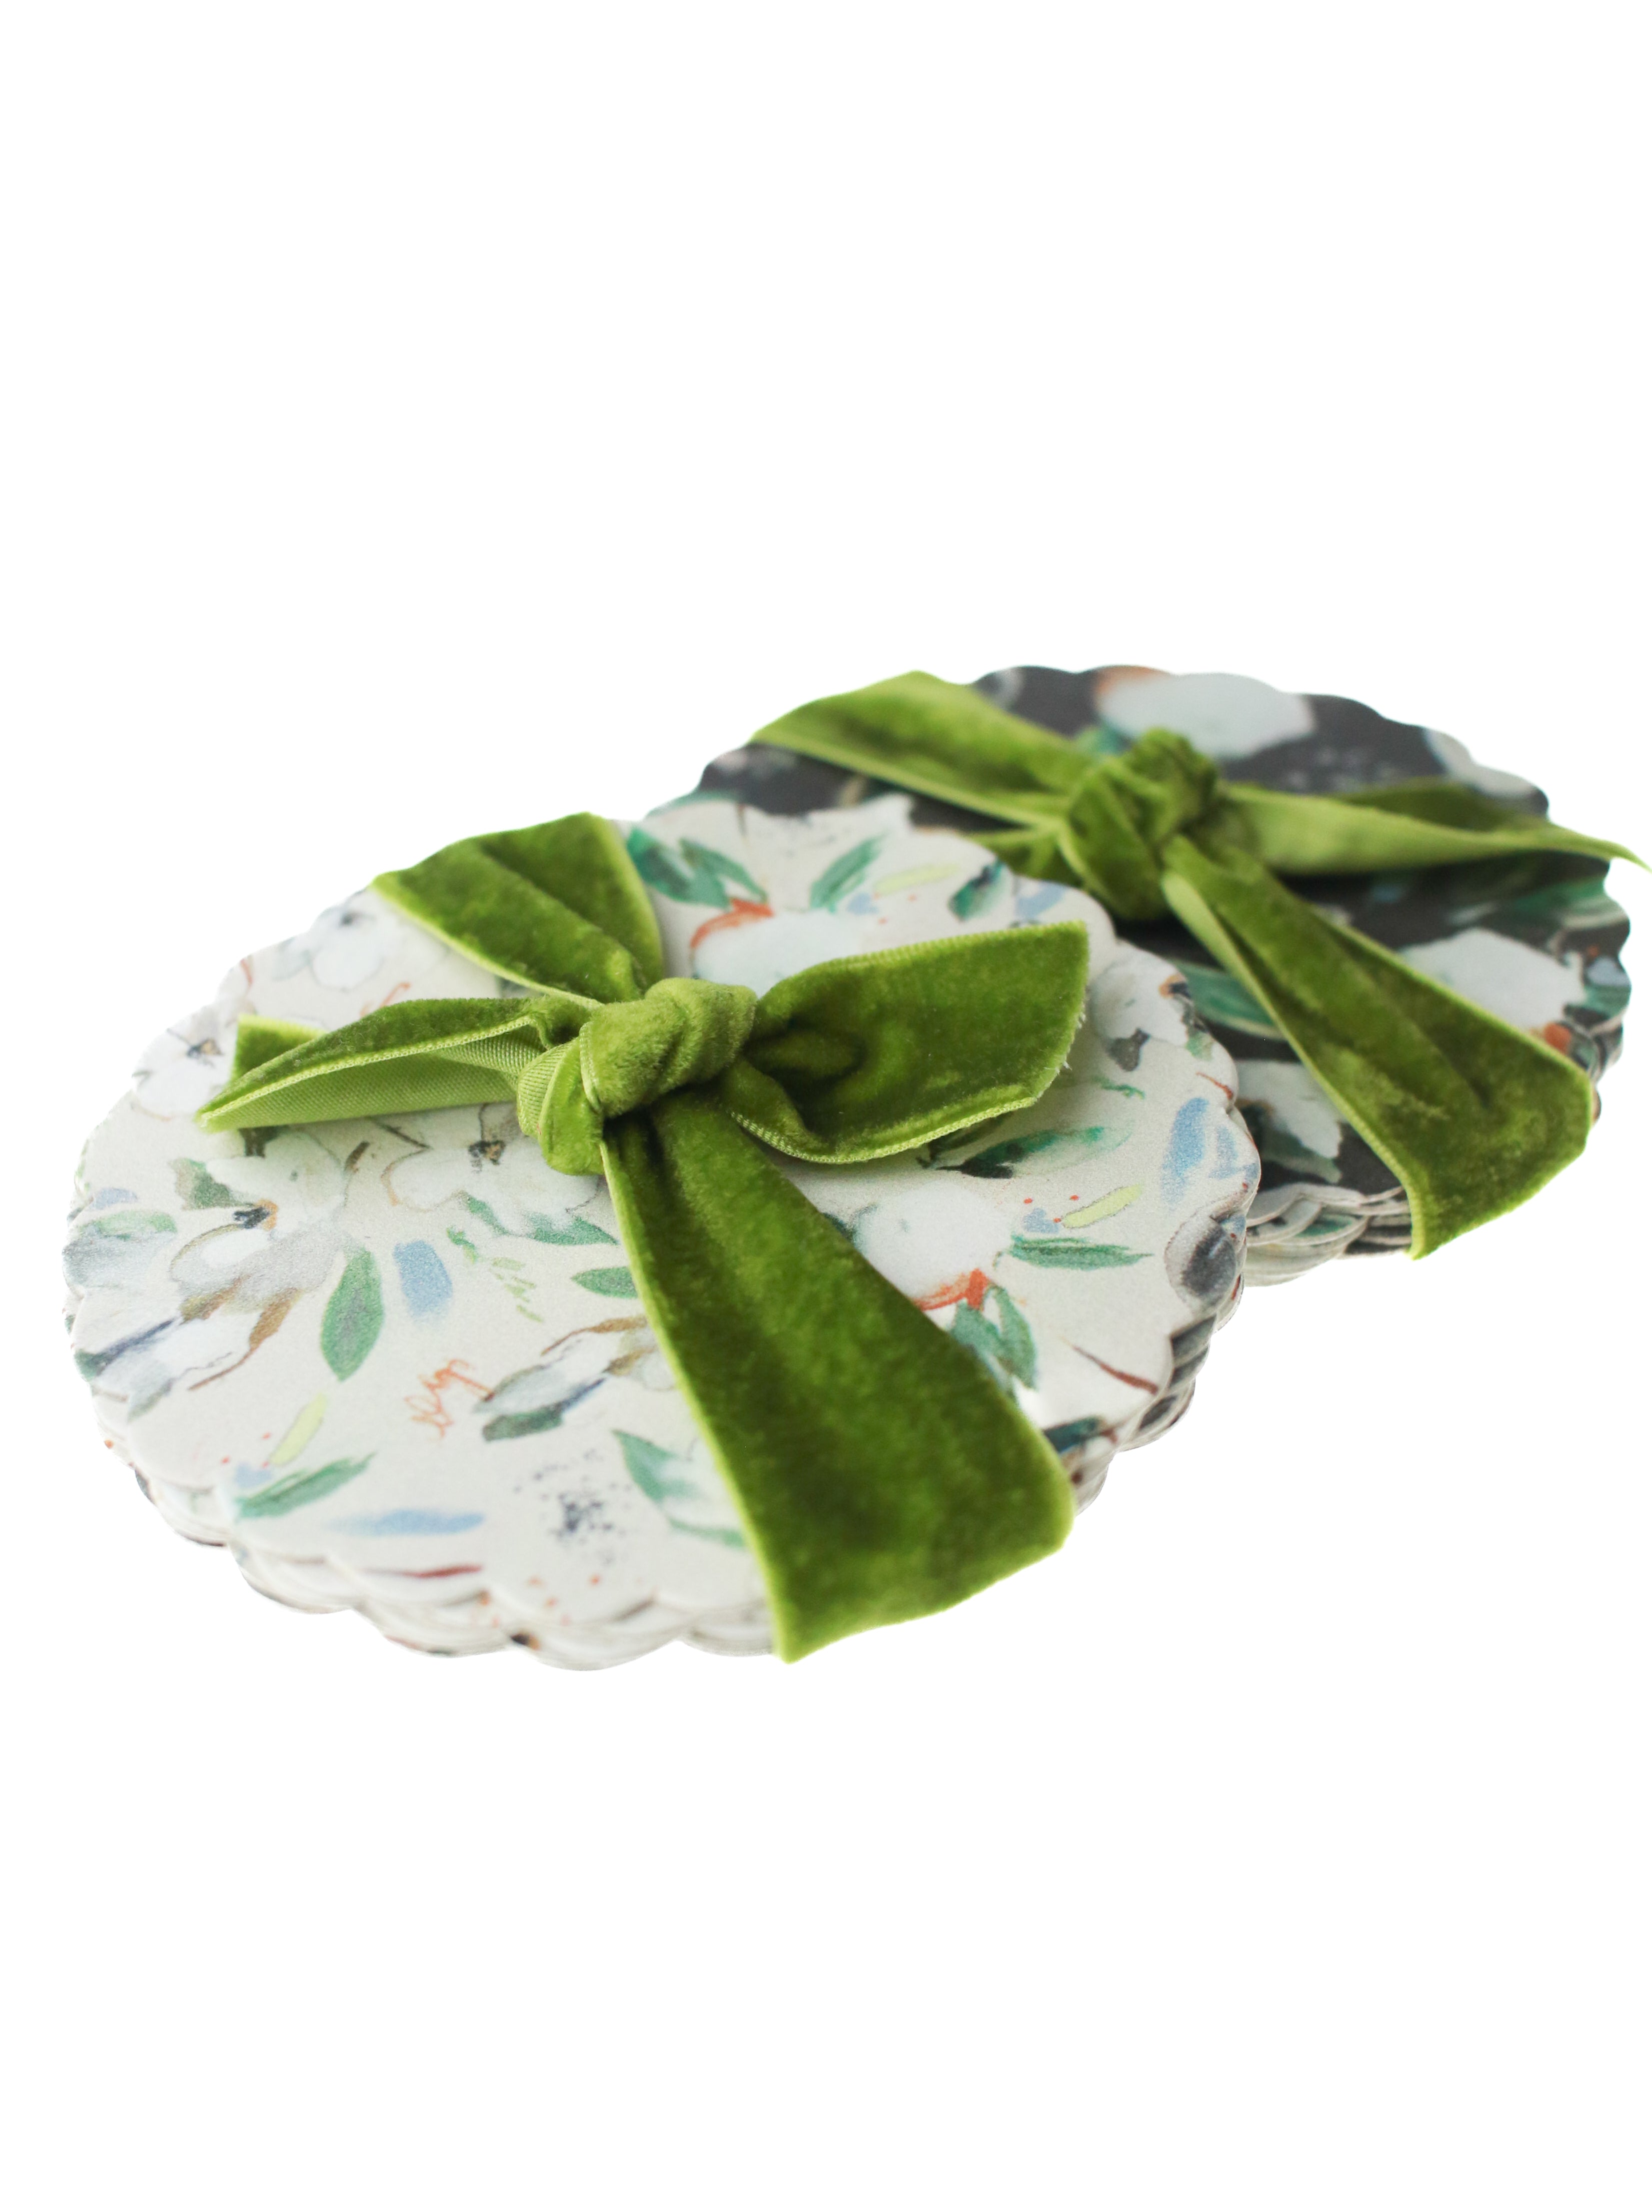 Magnolia Scalloped Paper Coaster | Set of 6